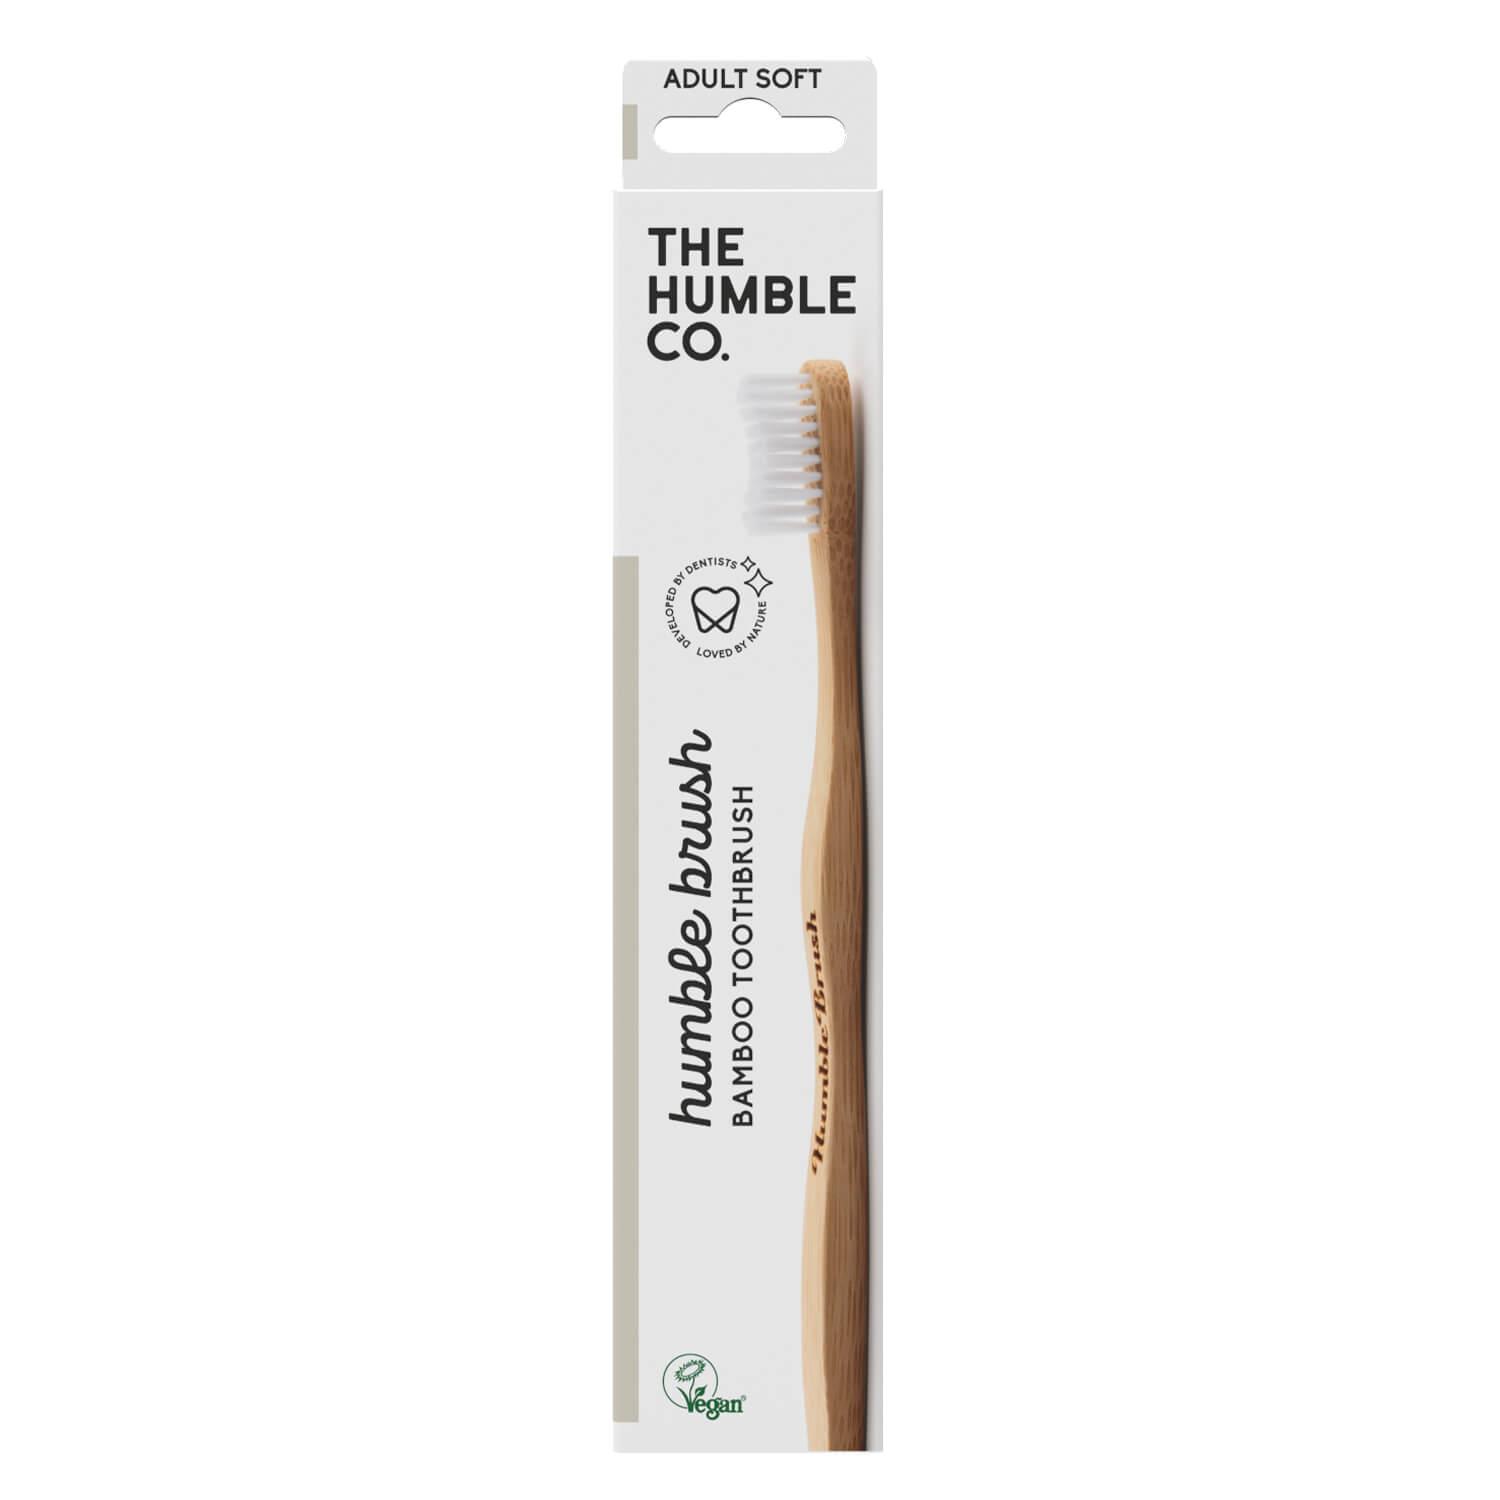 THE HUMBLE CO. - Humble Brush Toothbrush Adults White